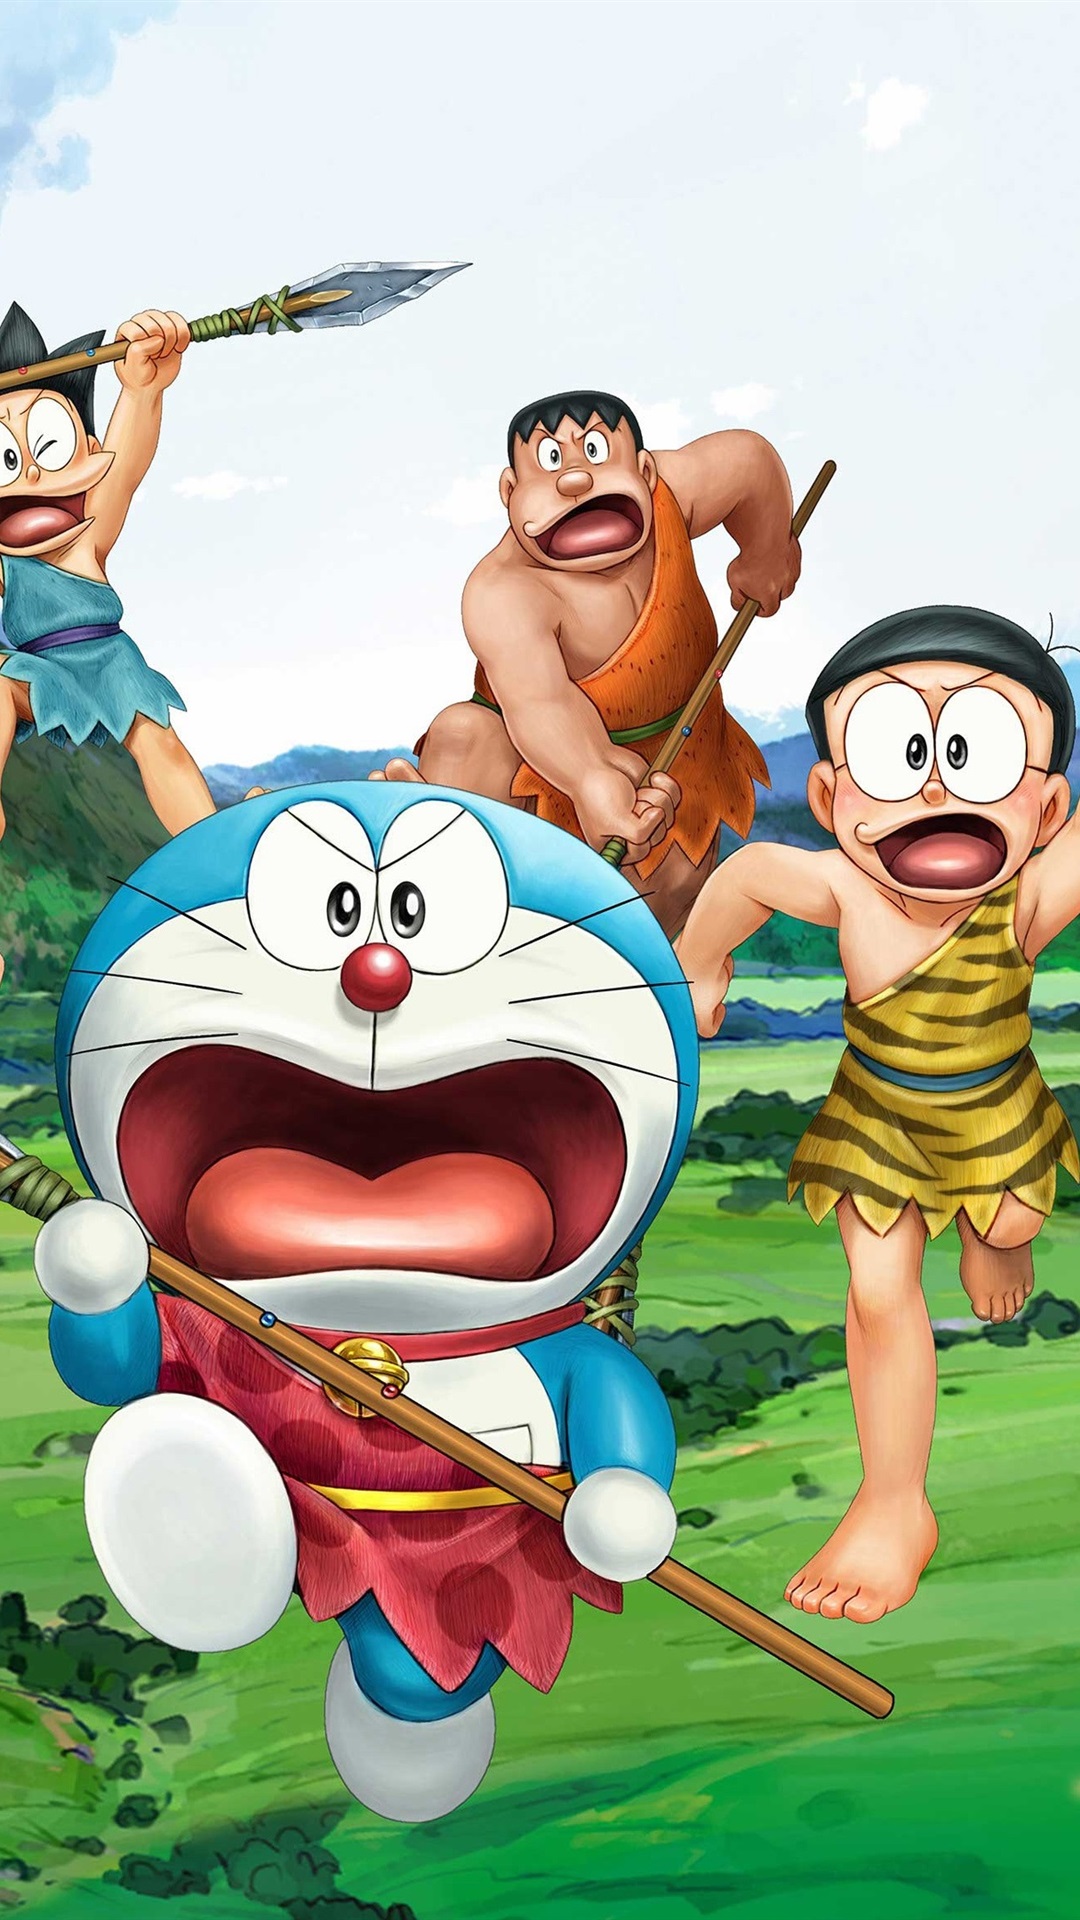 Iphone Wallpaper Doraemon 2016 Movie - Doraemon Wallpaper For Iphone -  1080x1920 Wallpaper 